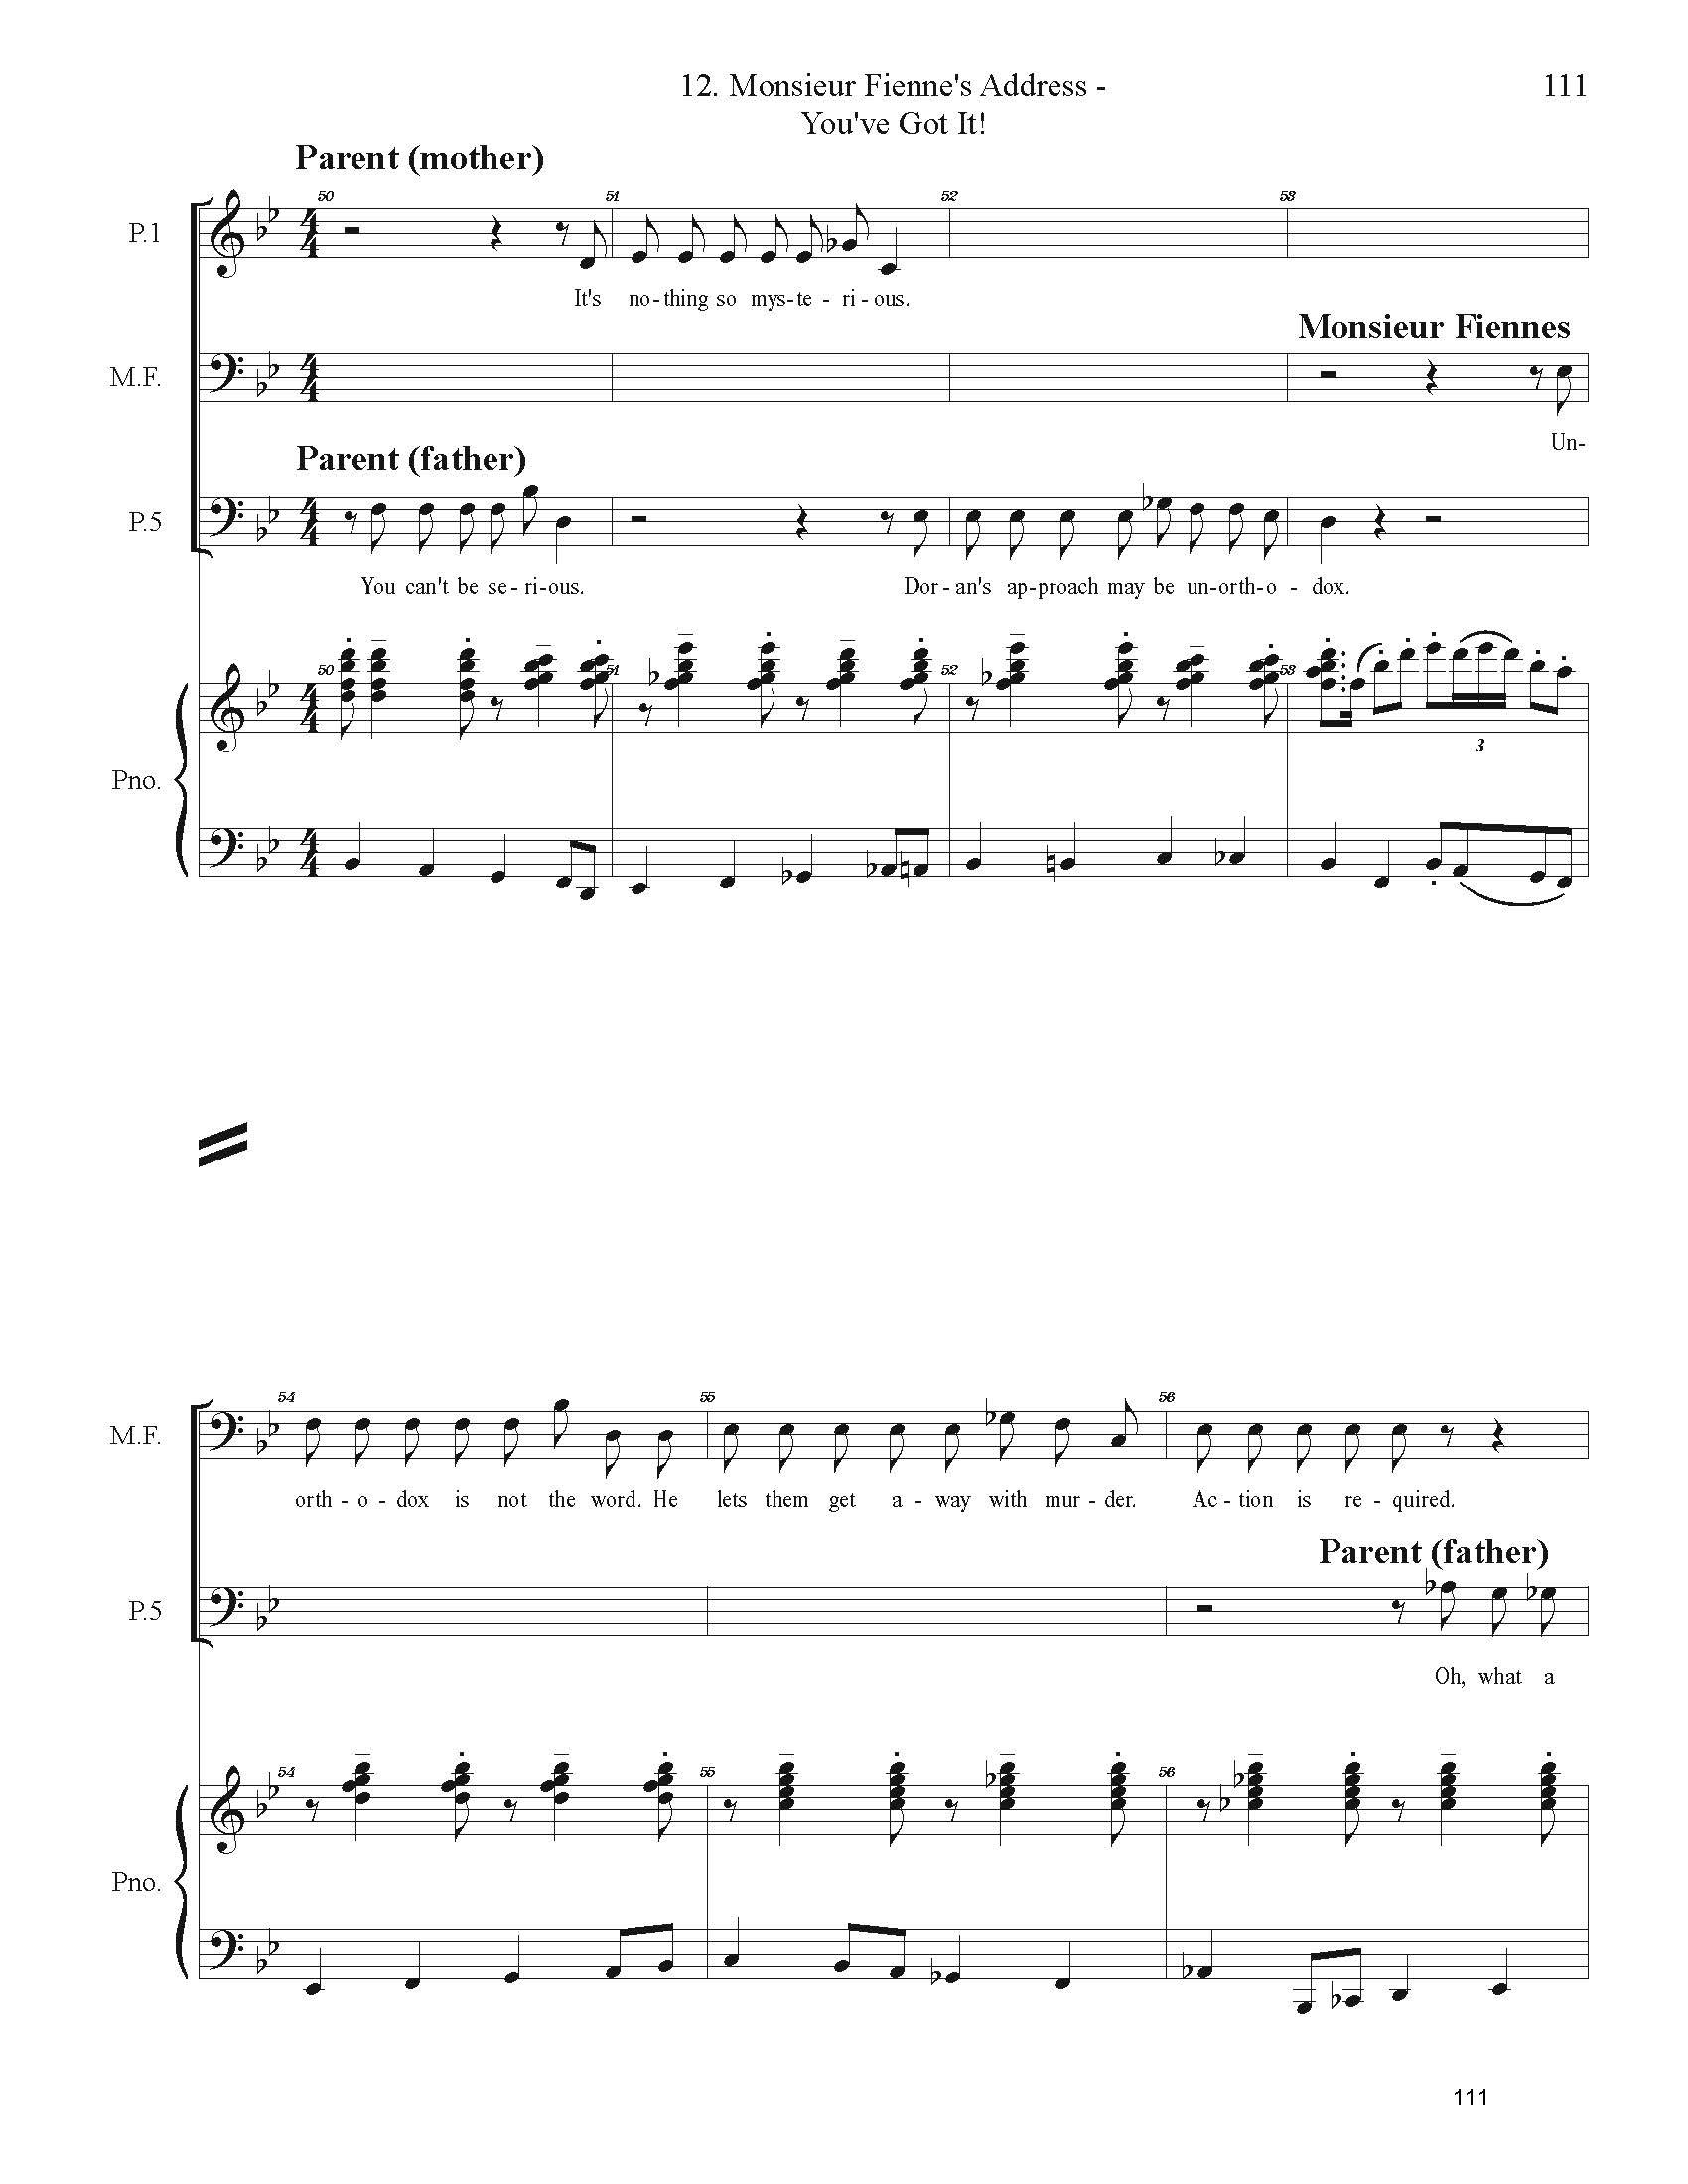 FULL PIANO VOCAL SCORE DRAFT 1 - Score_Page_111.jpg